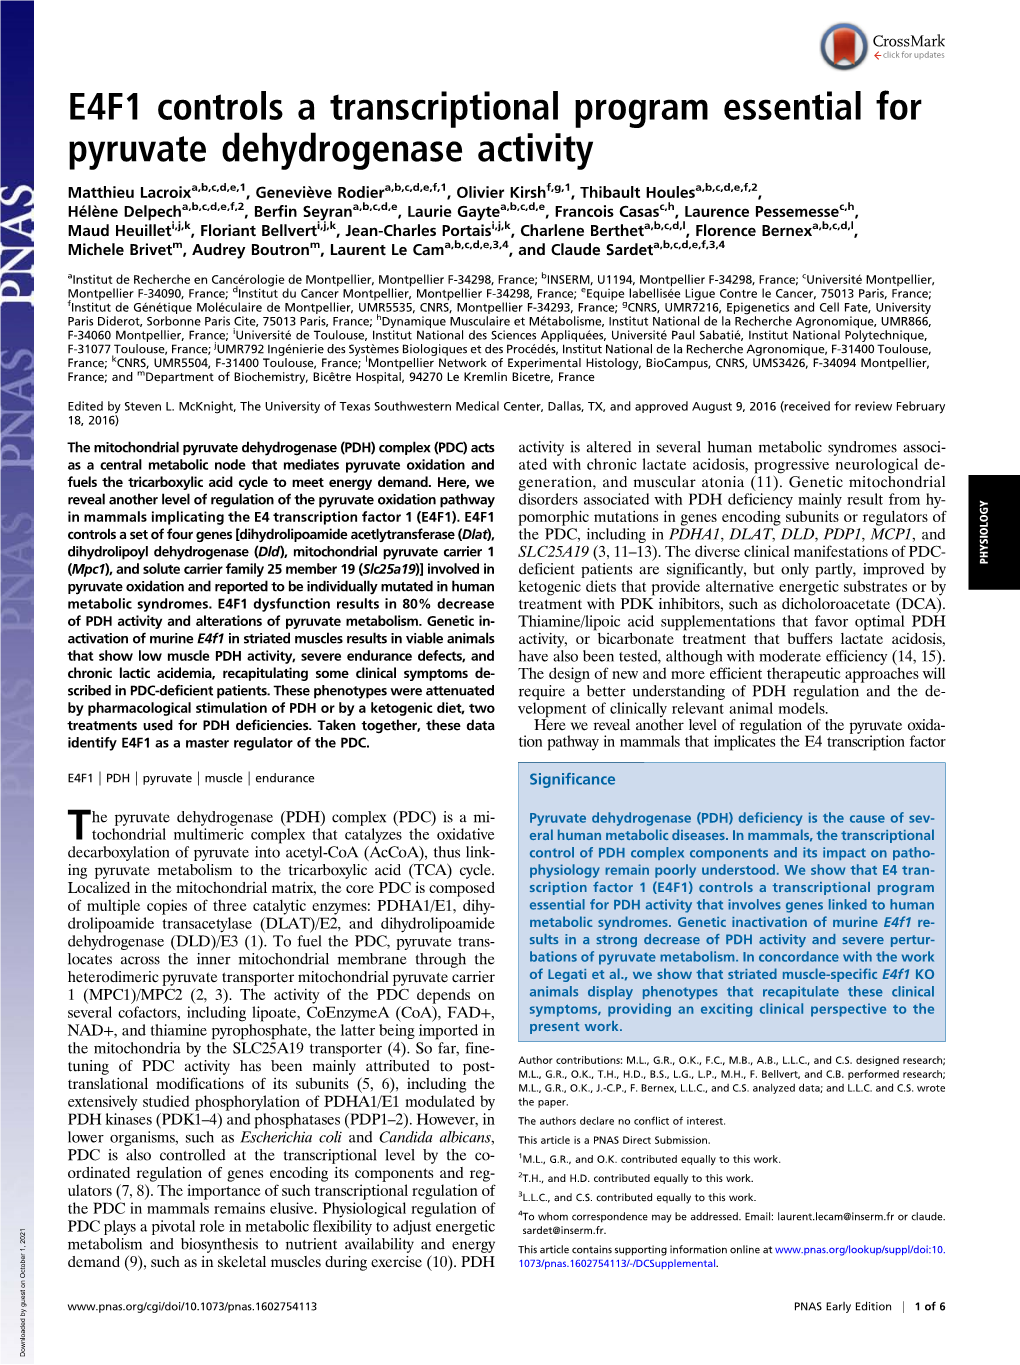 E4F1 Controls a Transcriptional Program Essential for Pyruvate Dehydrogenase Activity